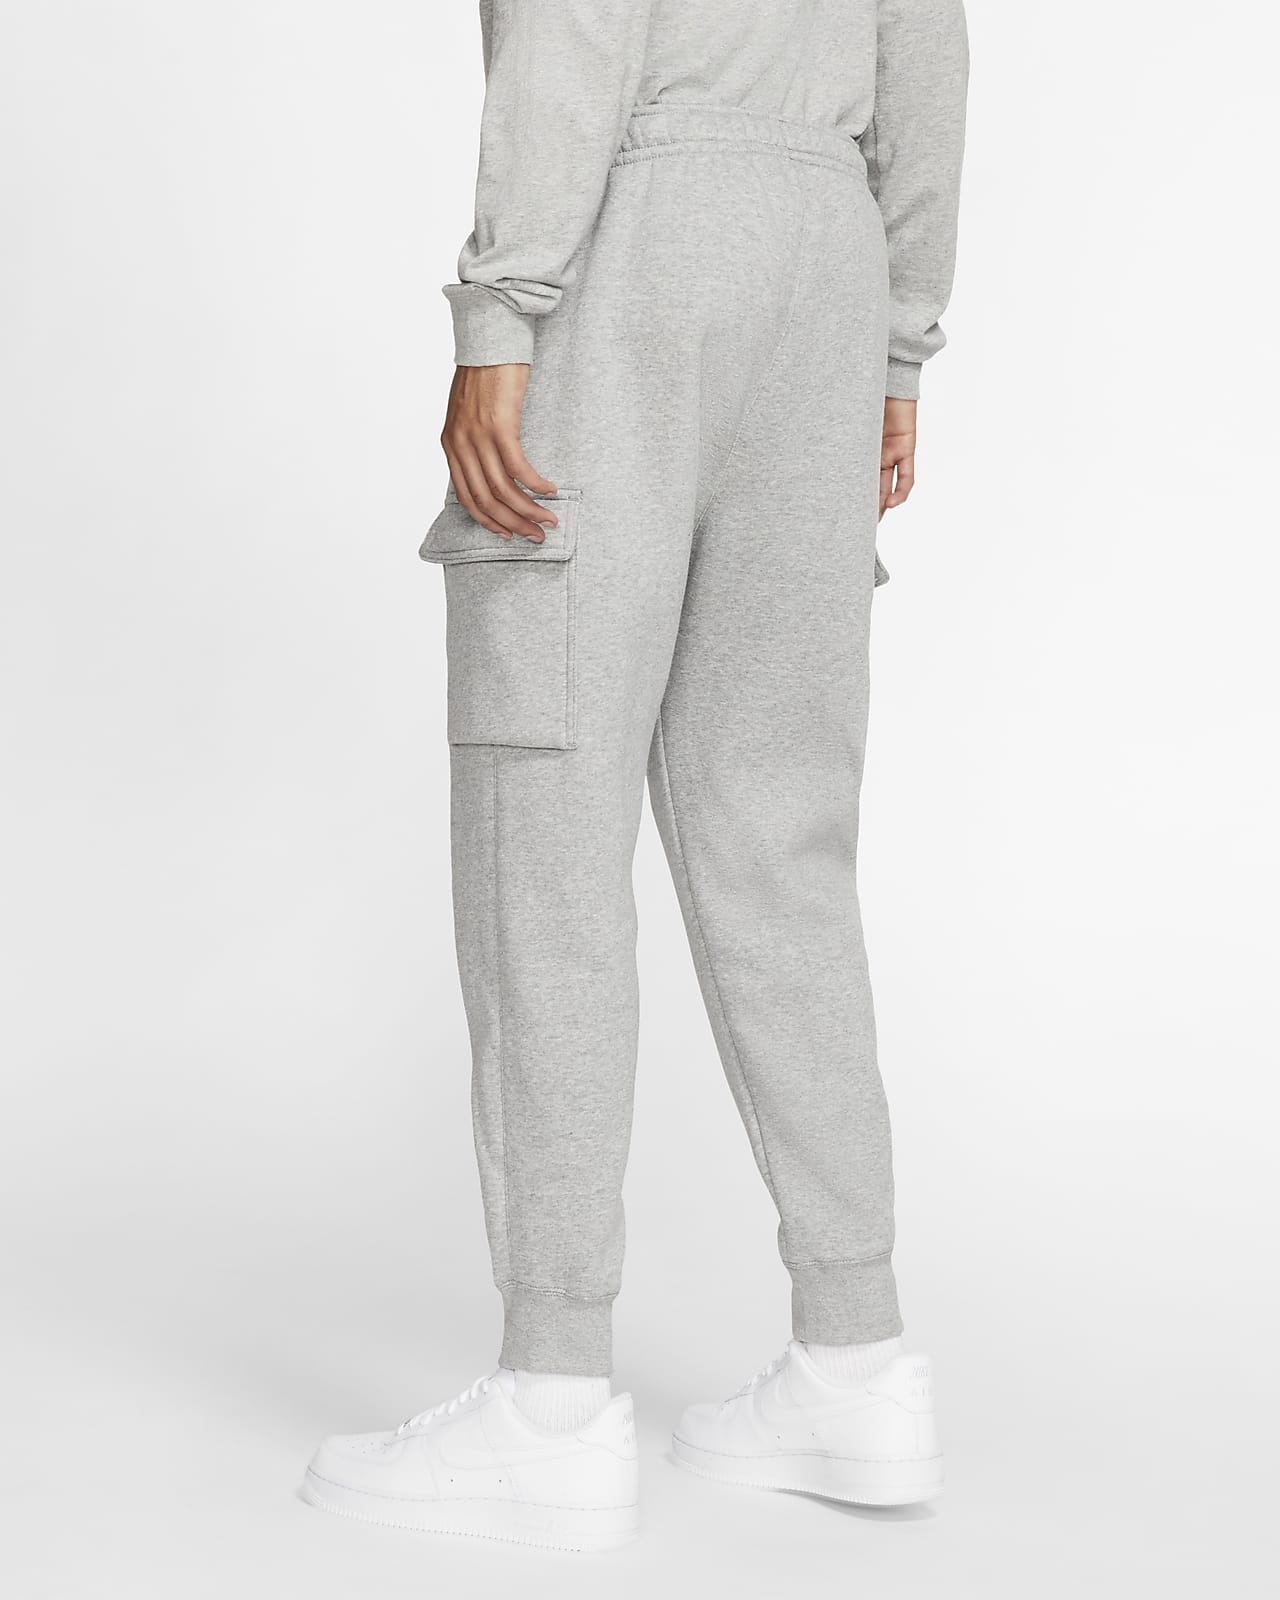 Pantalon Nike homme - cargo & fleece - Size? France